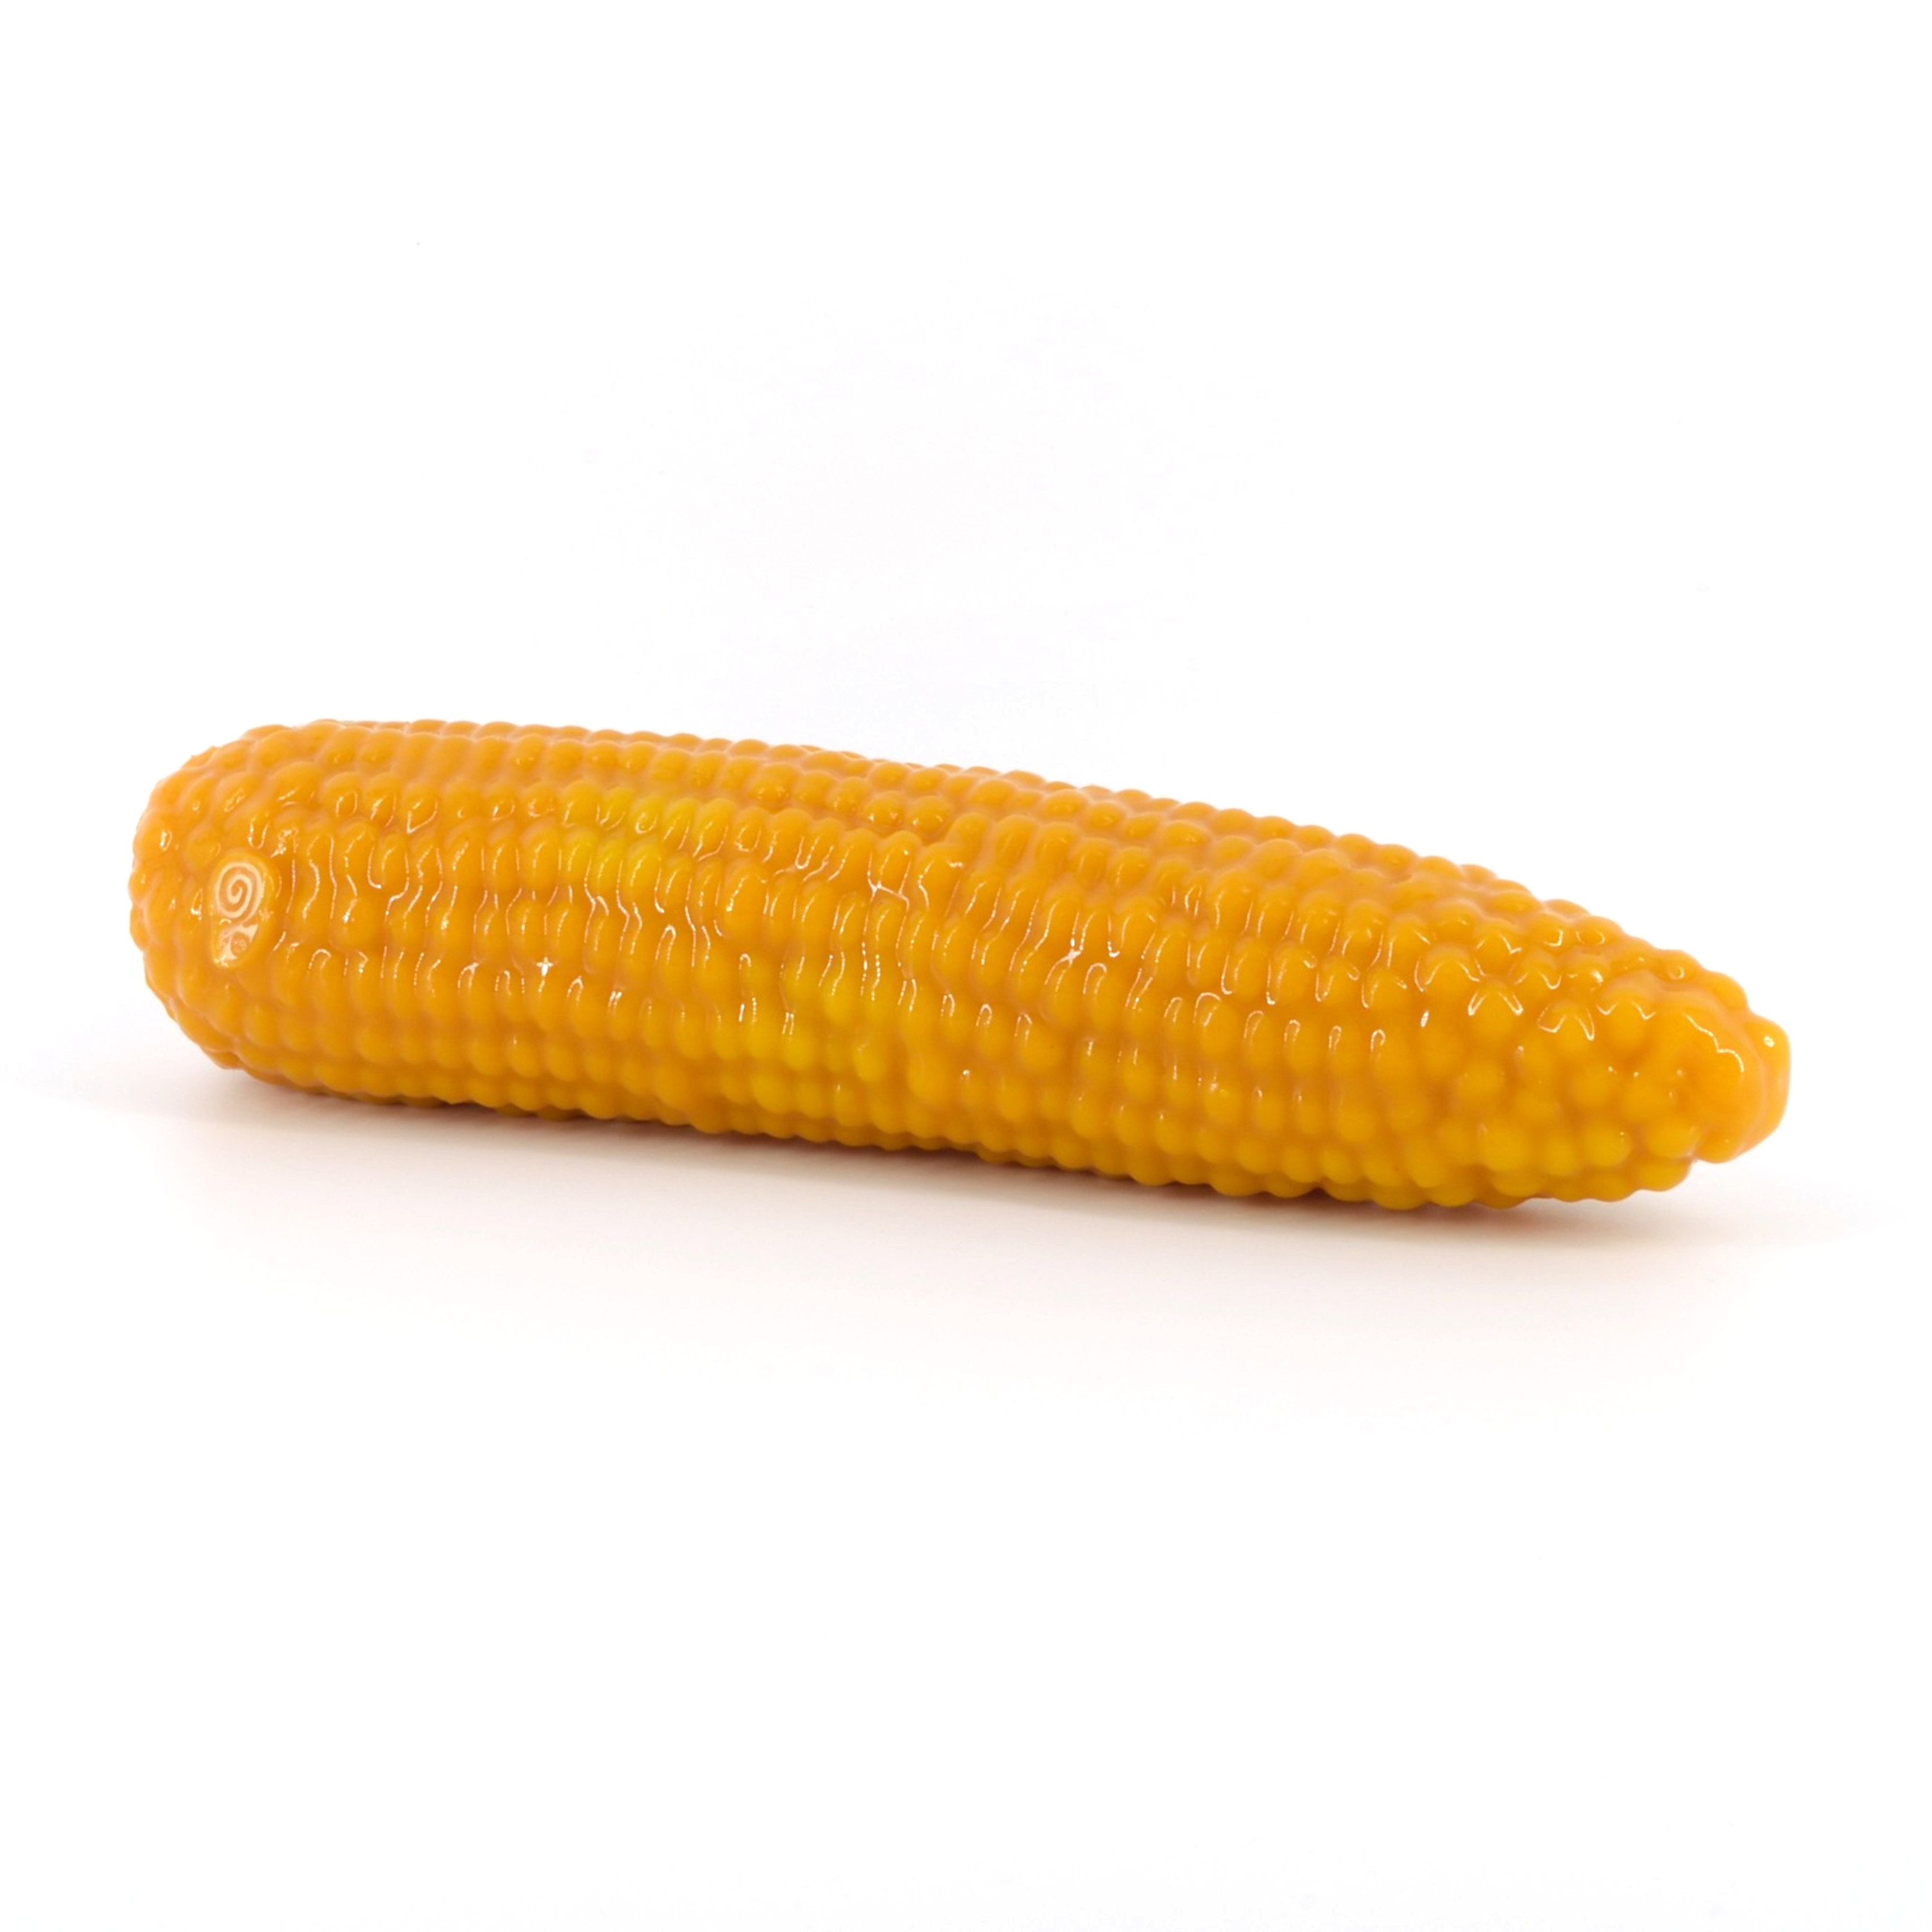 Corn on the cob, big